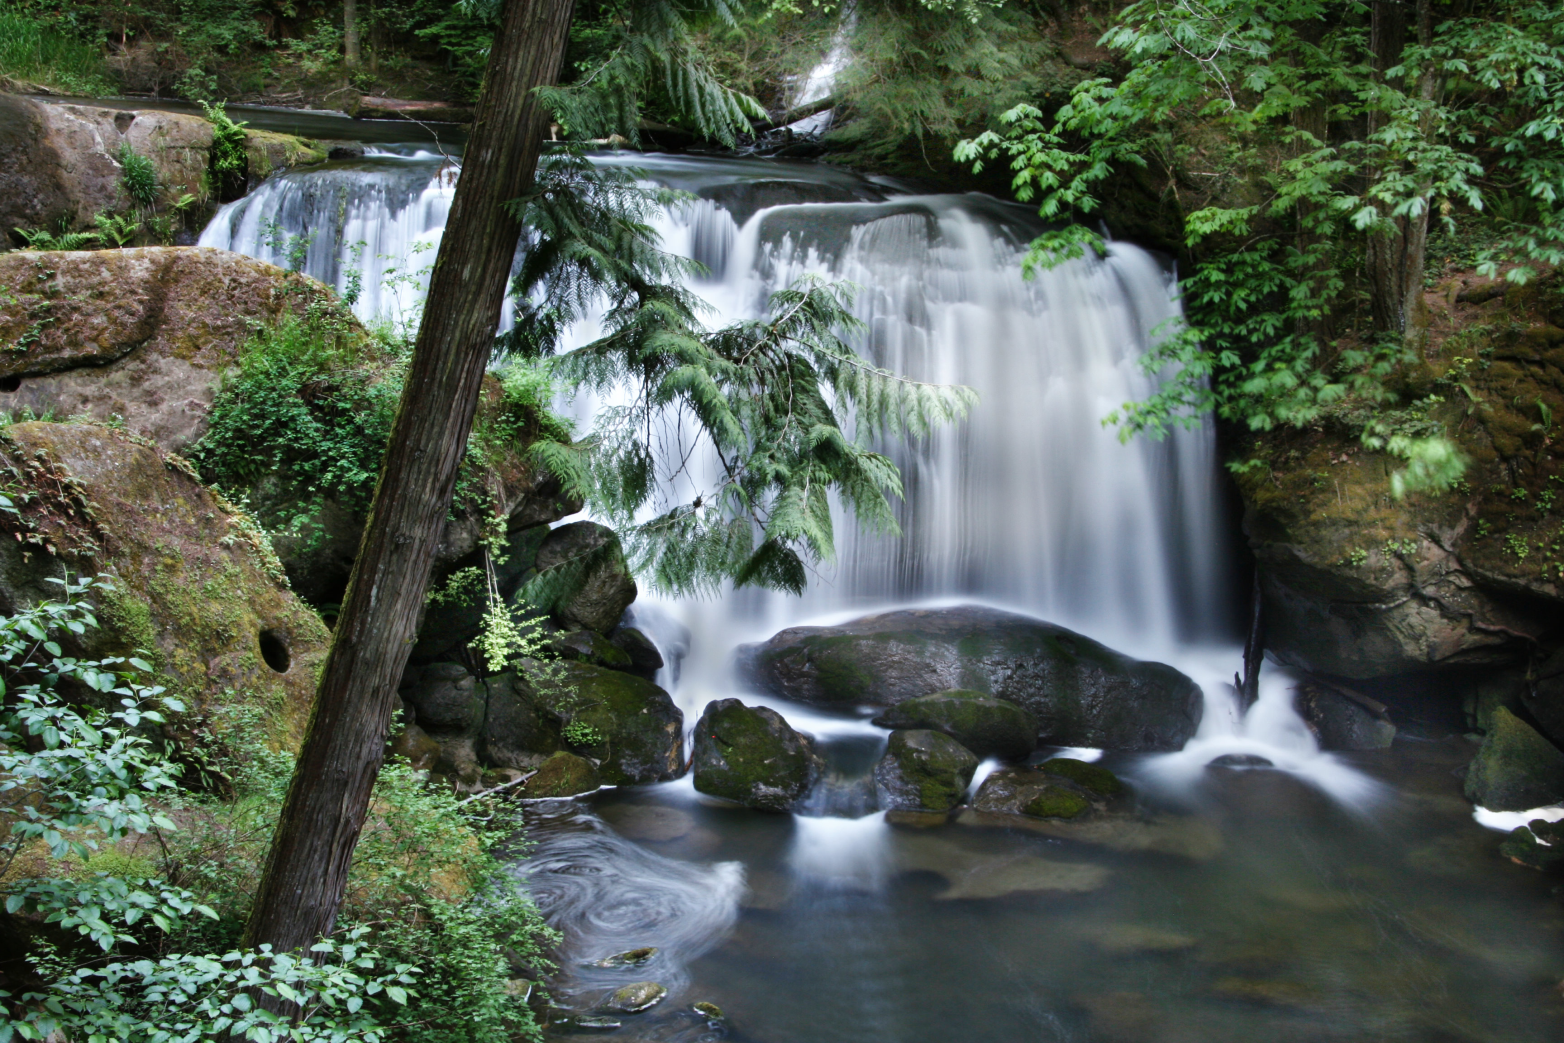 Whatcom Creek flowing over Whatcom Falls in Northwest Washington state